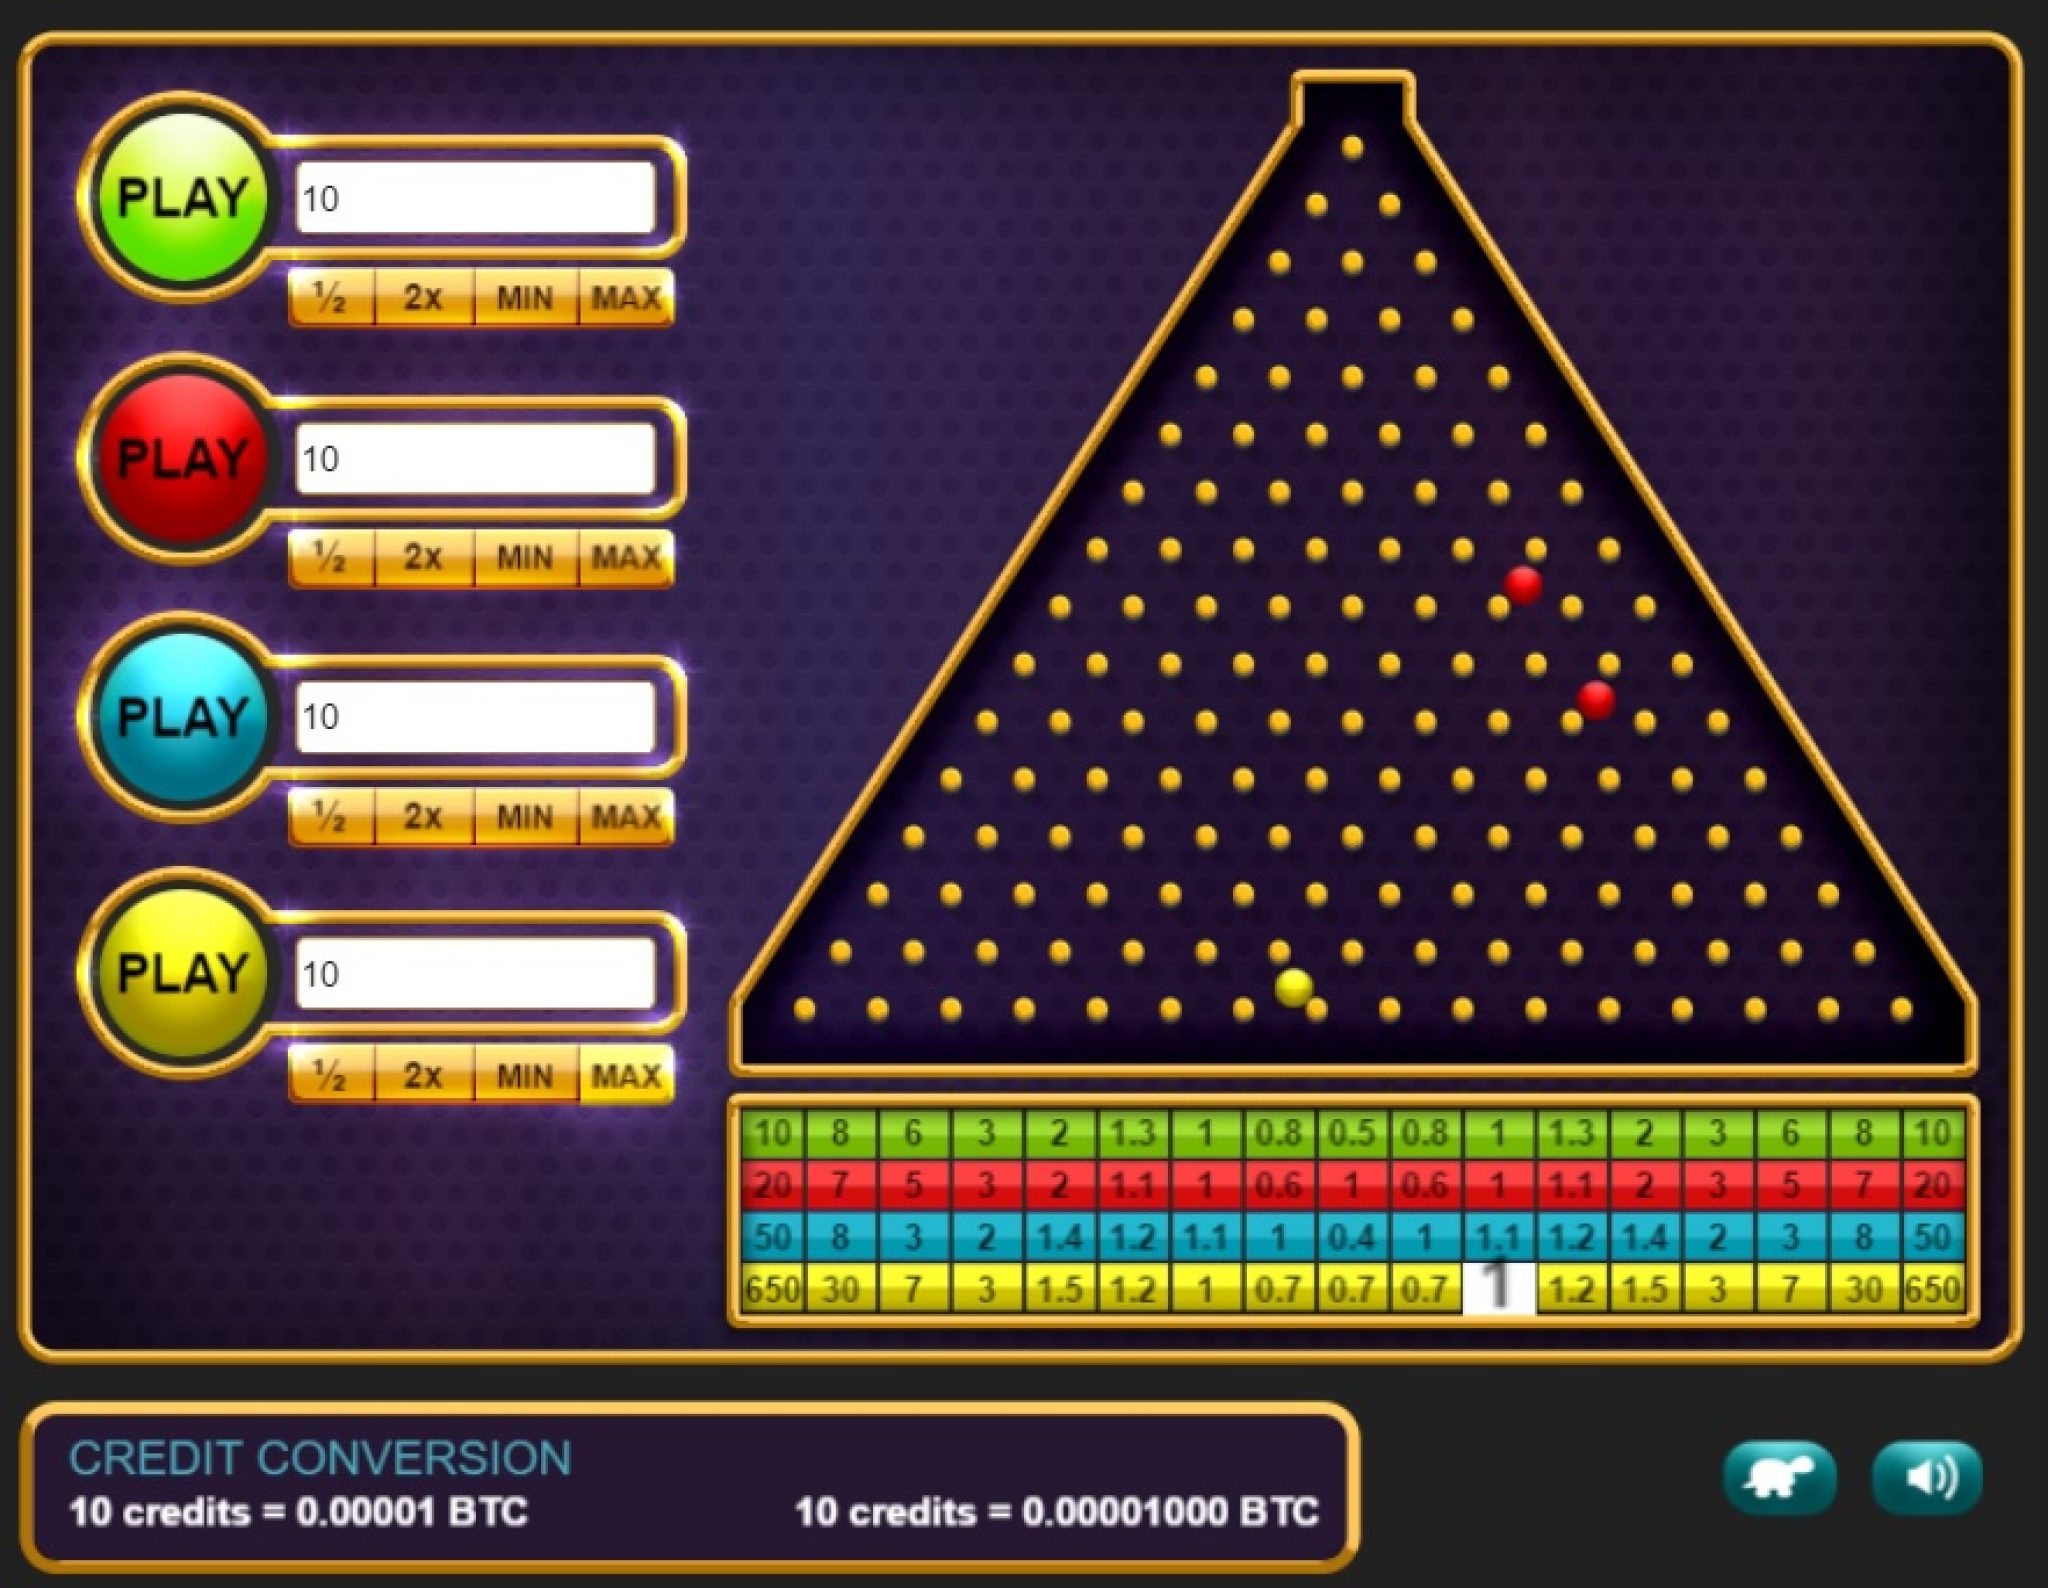 online crypto casino games